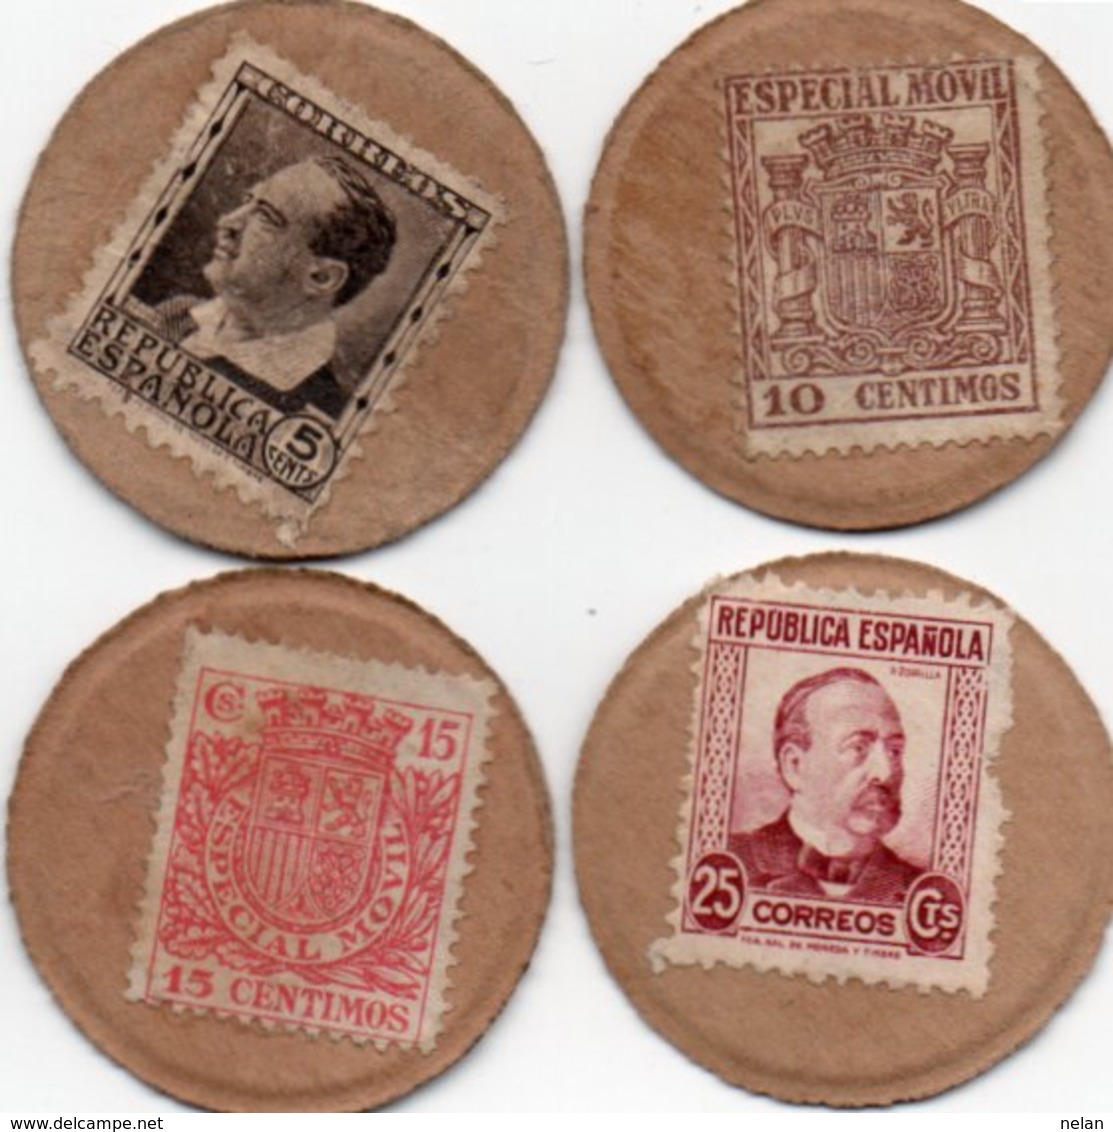 SPAGNA 5,10,15,25 CENTIMOS 1938 P-96 F,I,P,R (PERFETTE CONDIZIONI)Spagna, Fábrica Nacional De Moneda Y Timbre - FNMT - Sammlungen